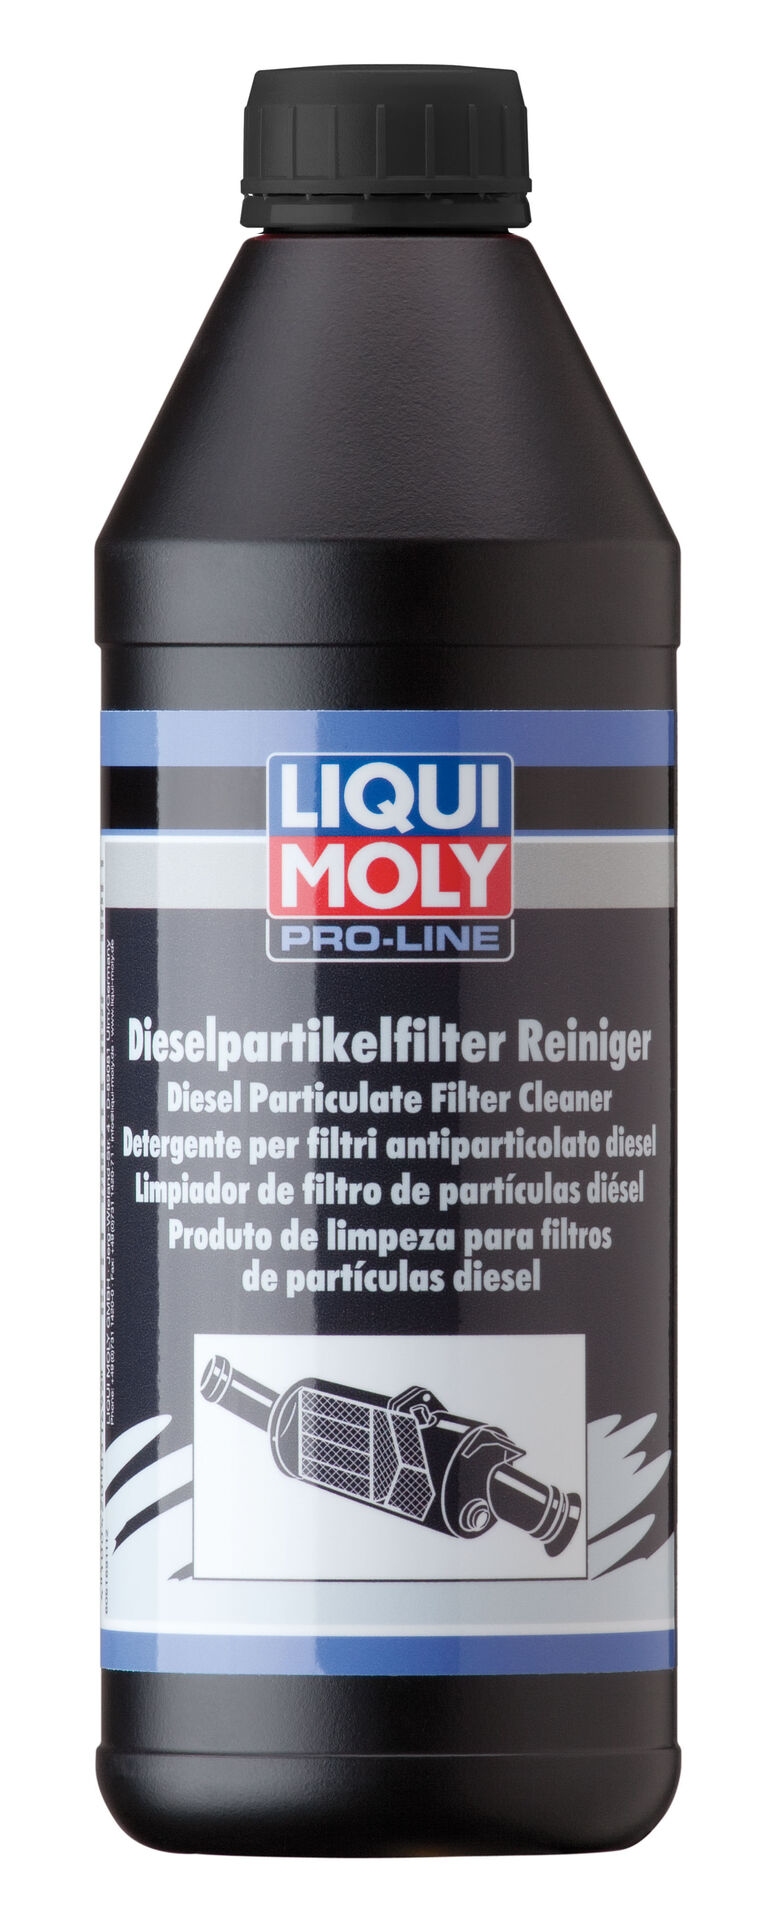 Liqui Moly 4061659033562 1x LIQUI MOLY 5169 Pro-Line Dieselpartikelfilterreiniger 1 l